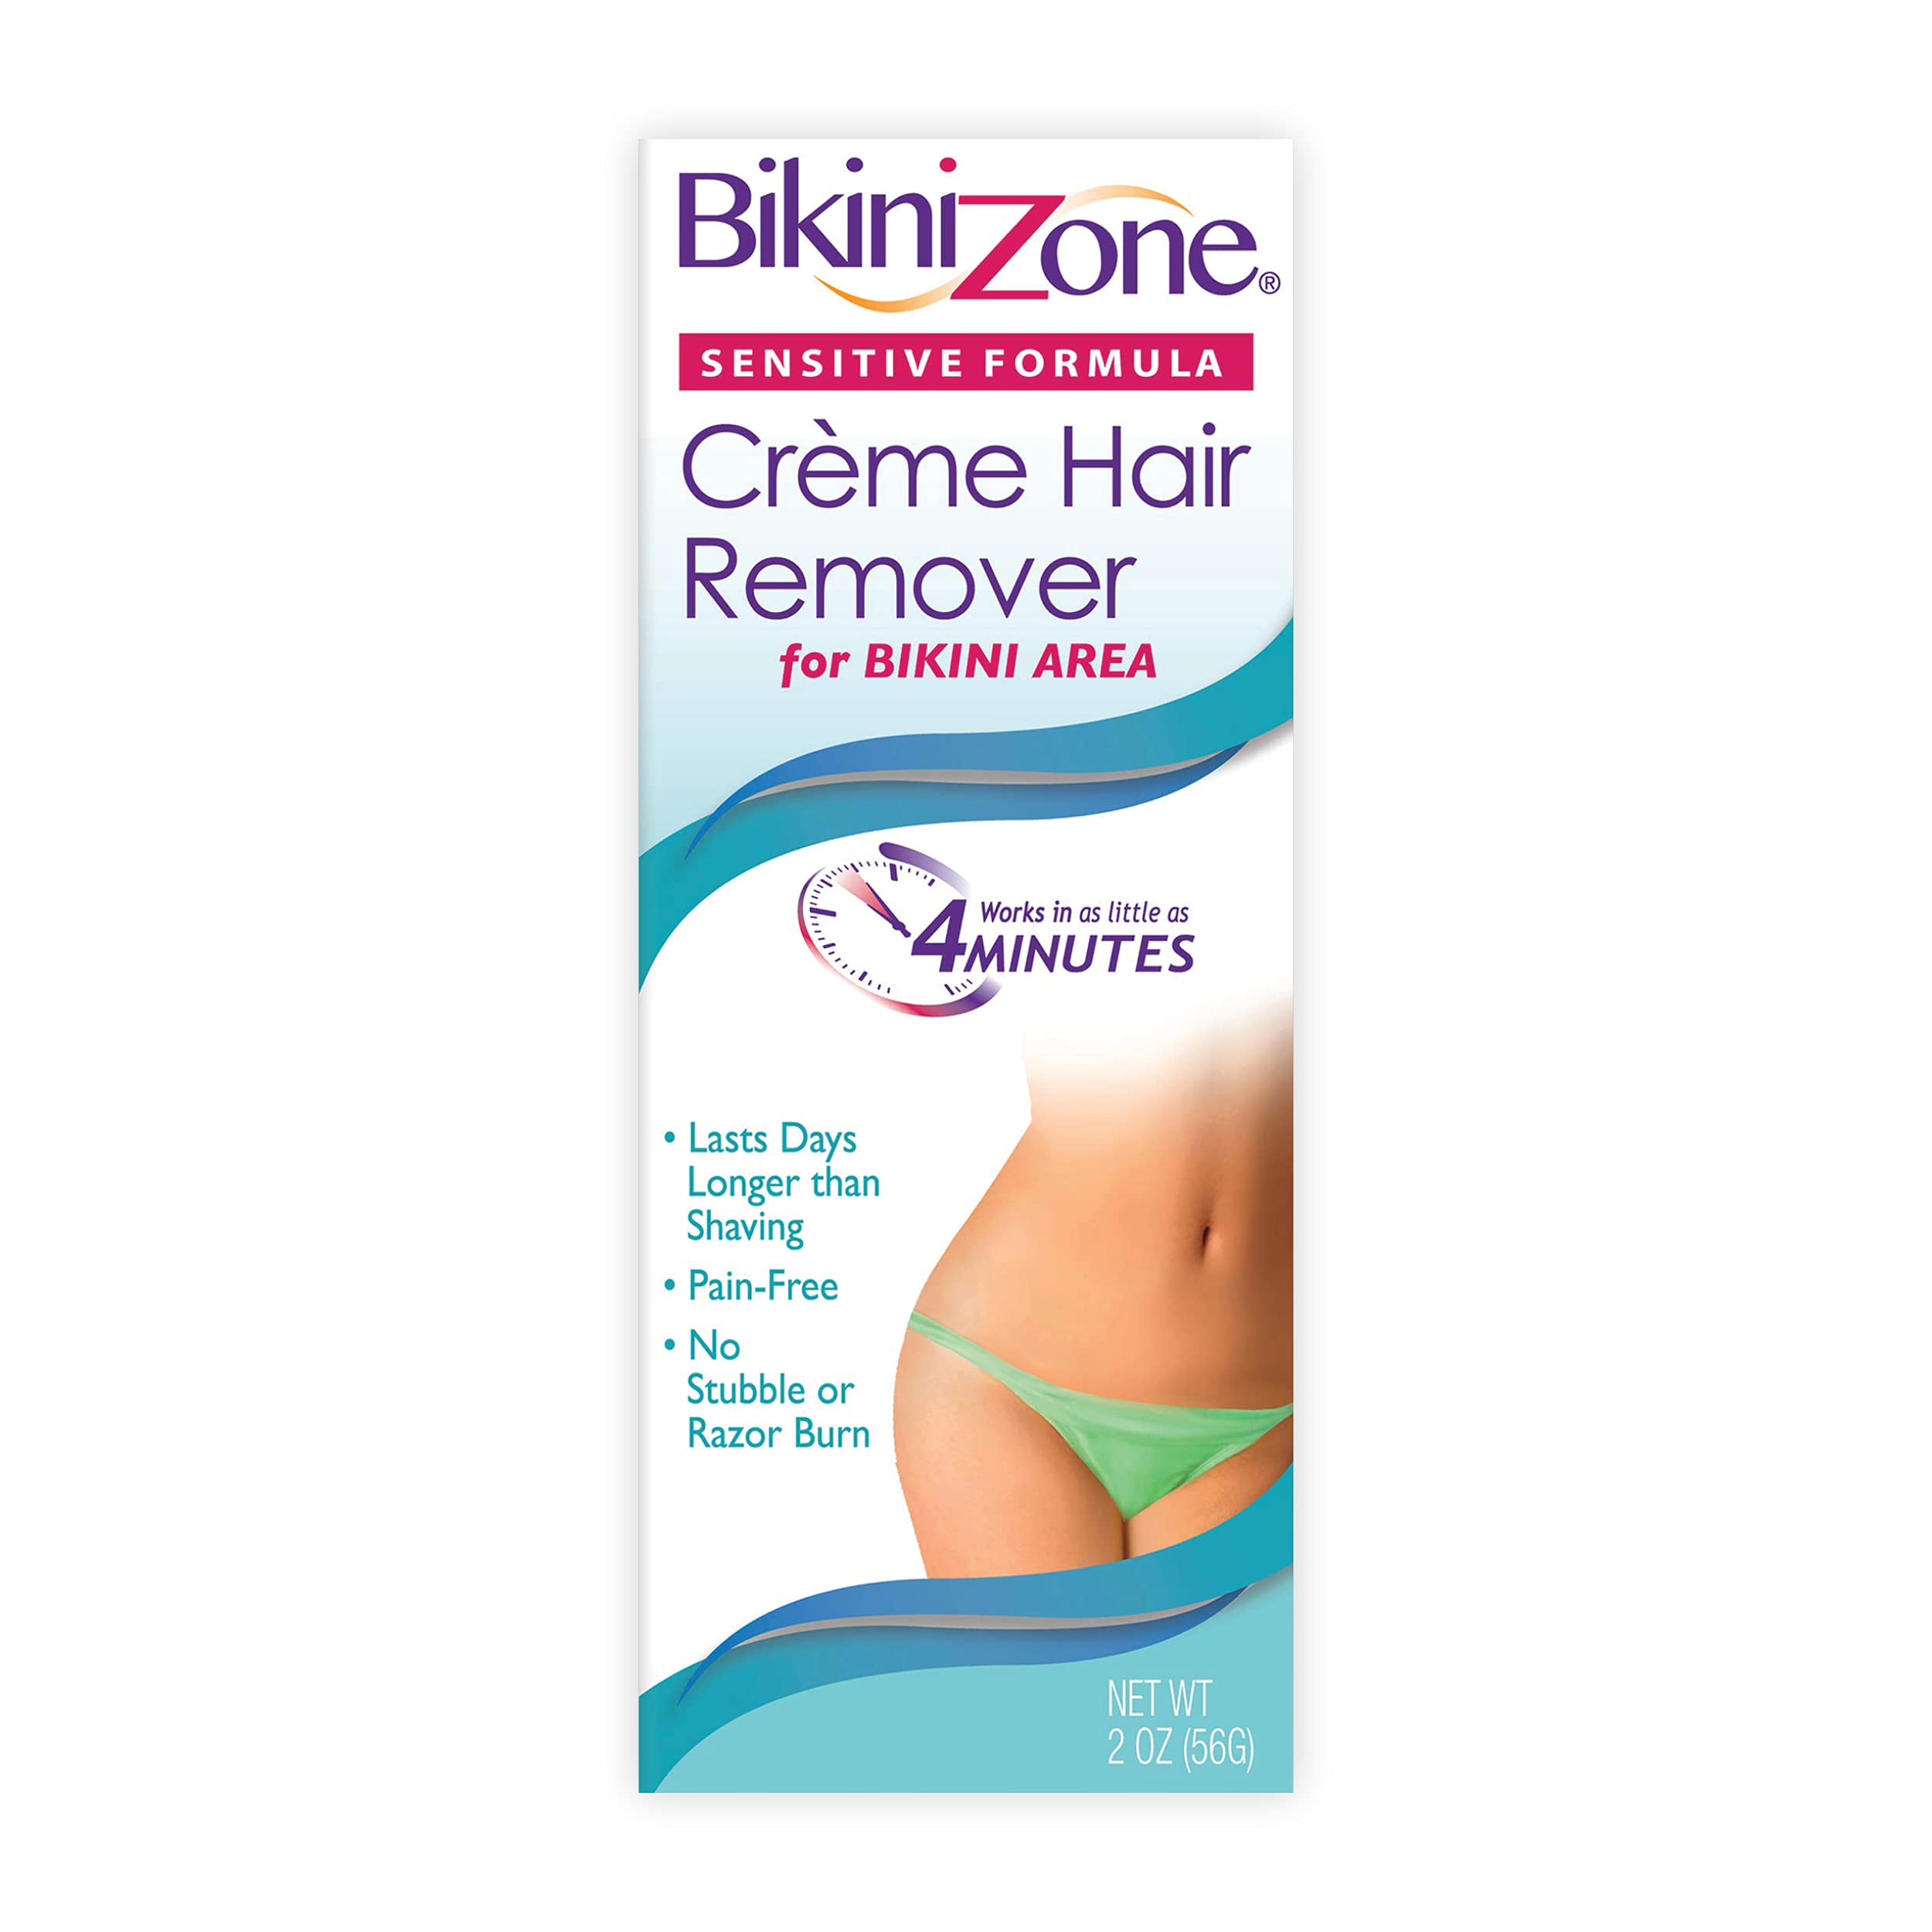 Bikini Zone Creme Hair Remover